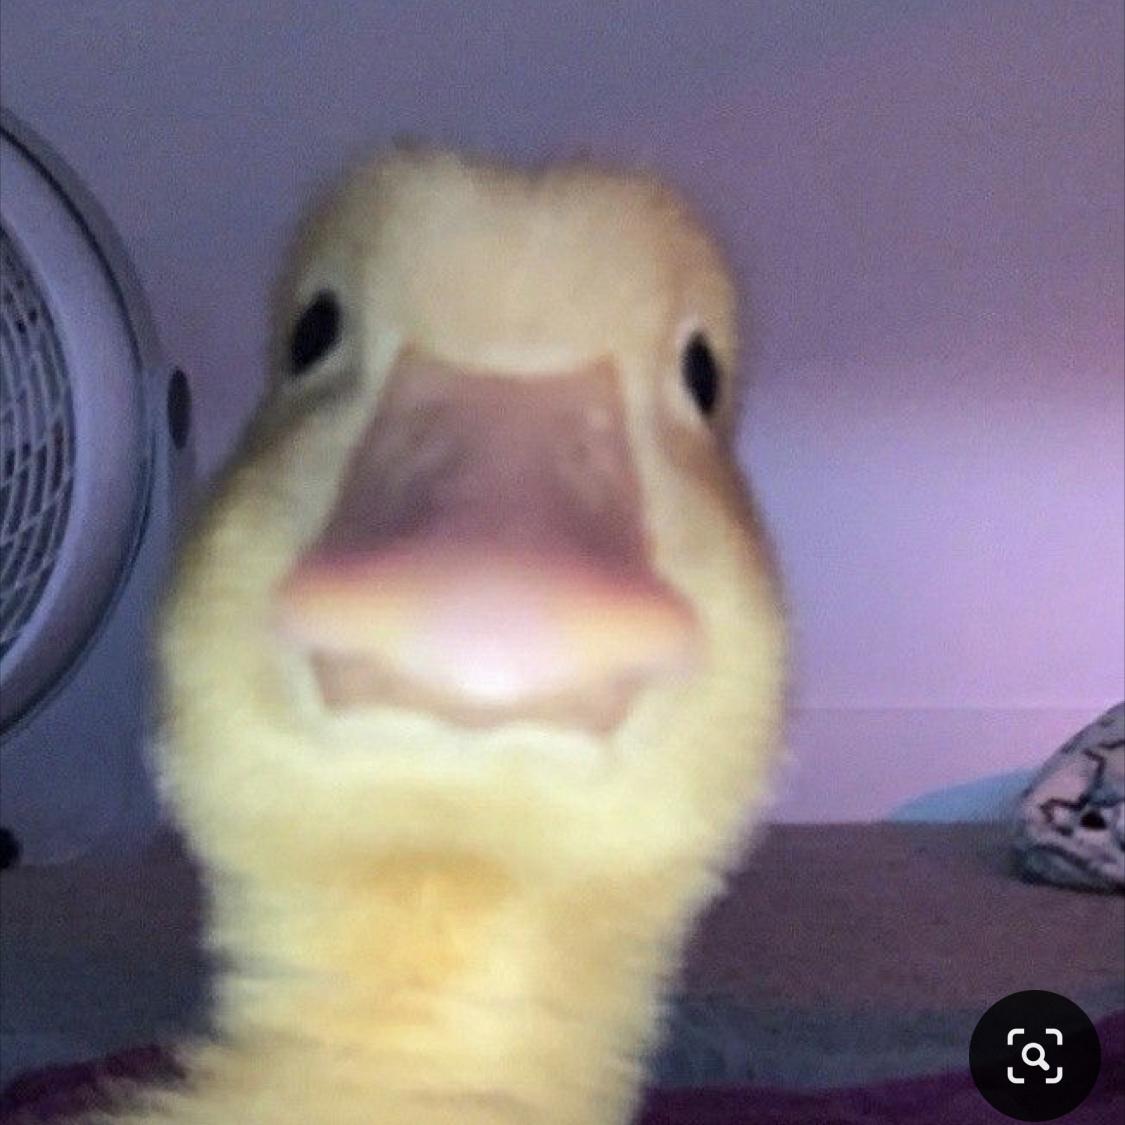 Ducks4life's images